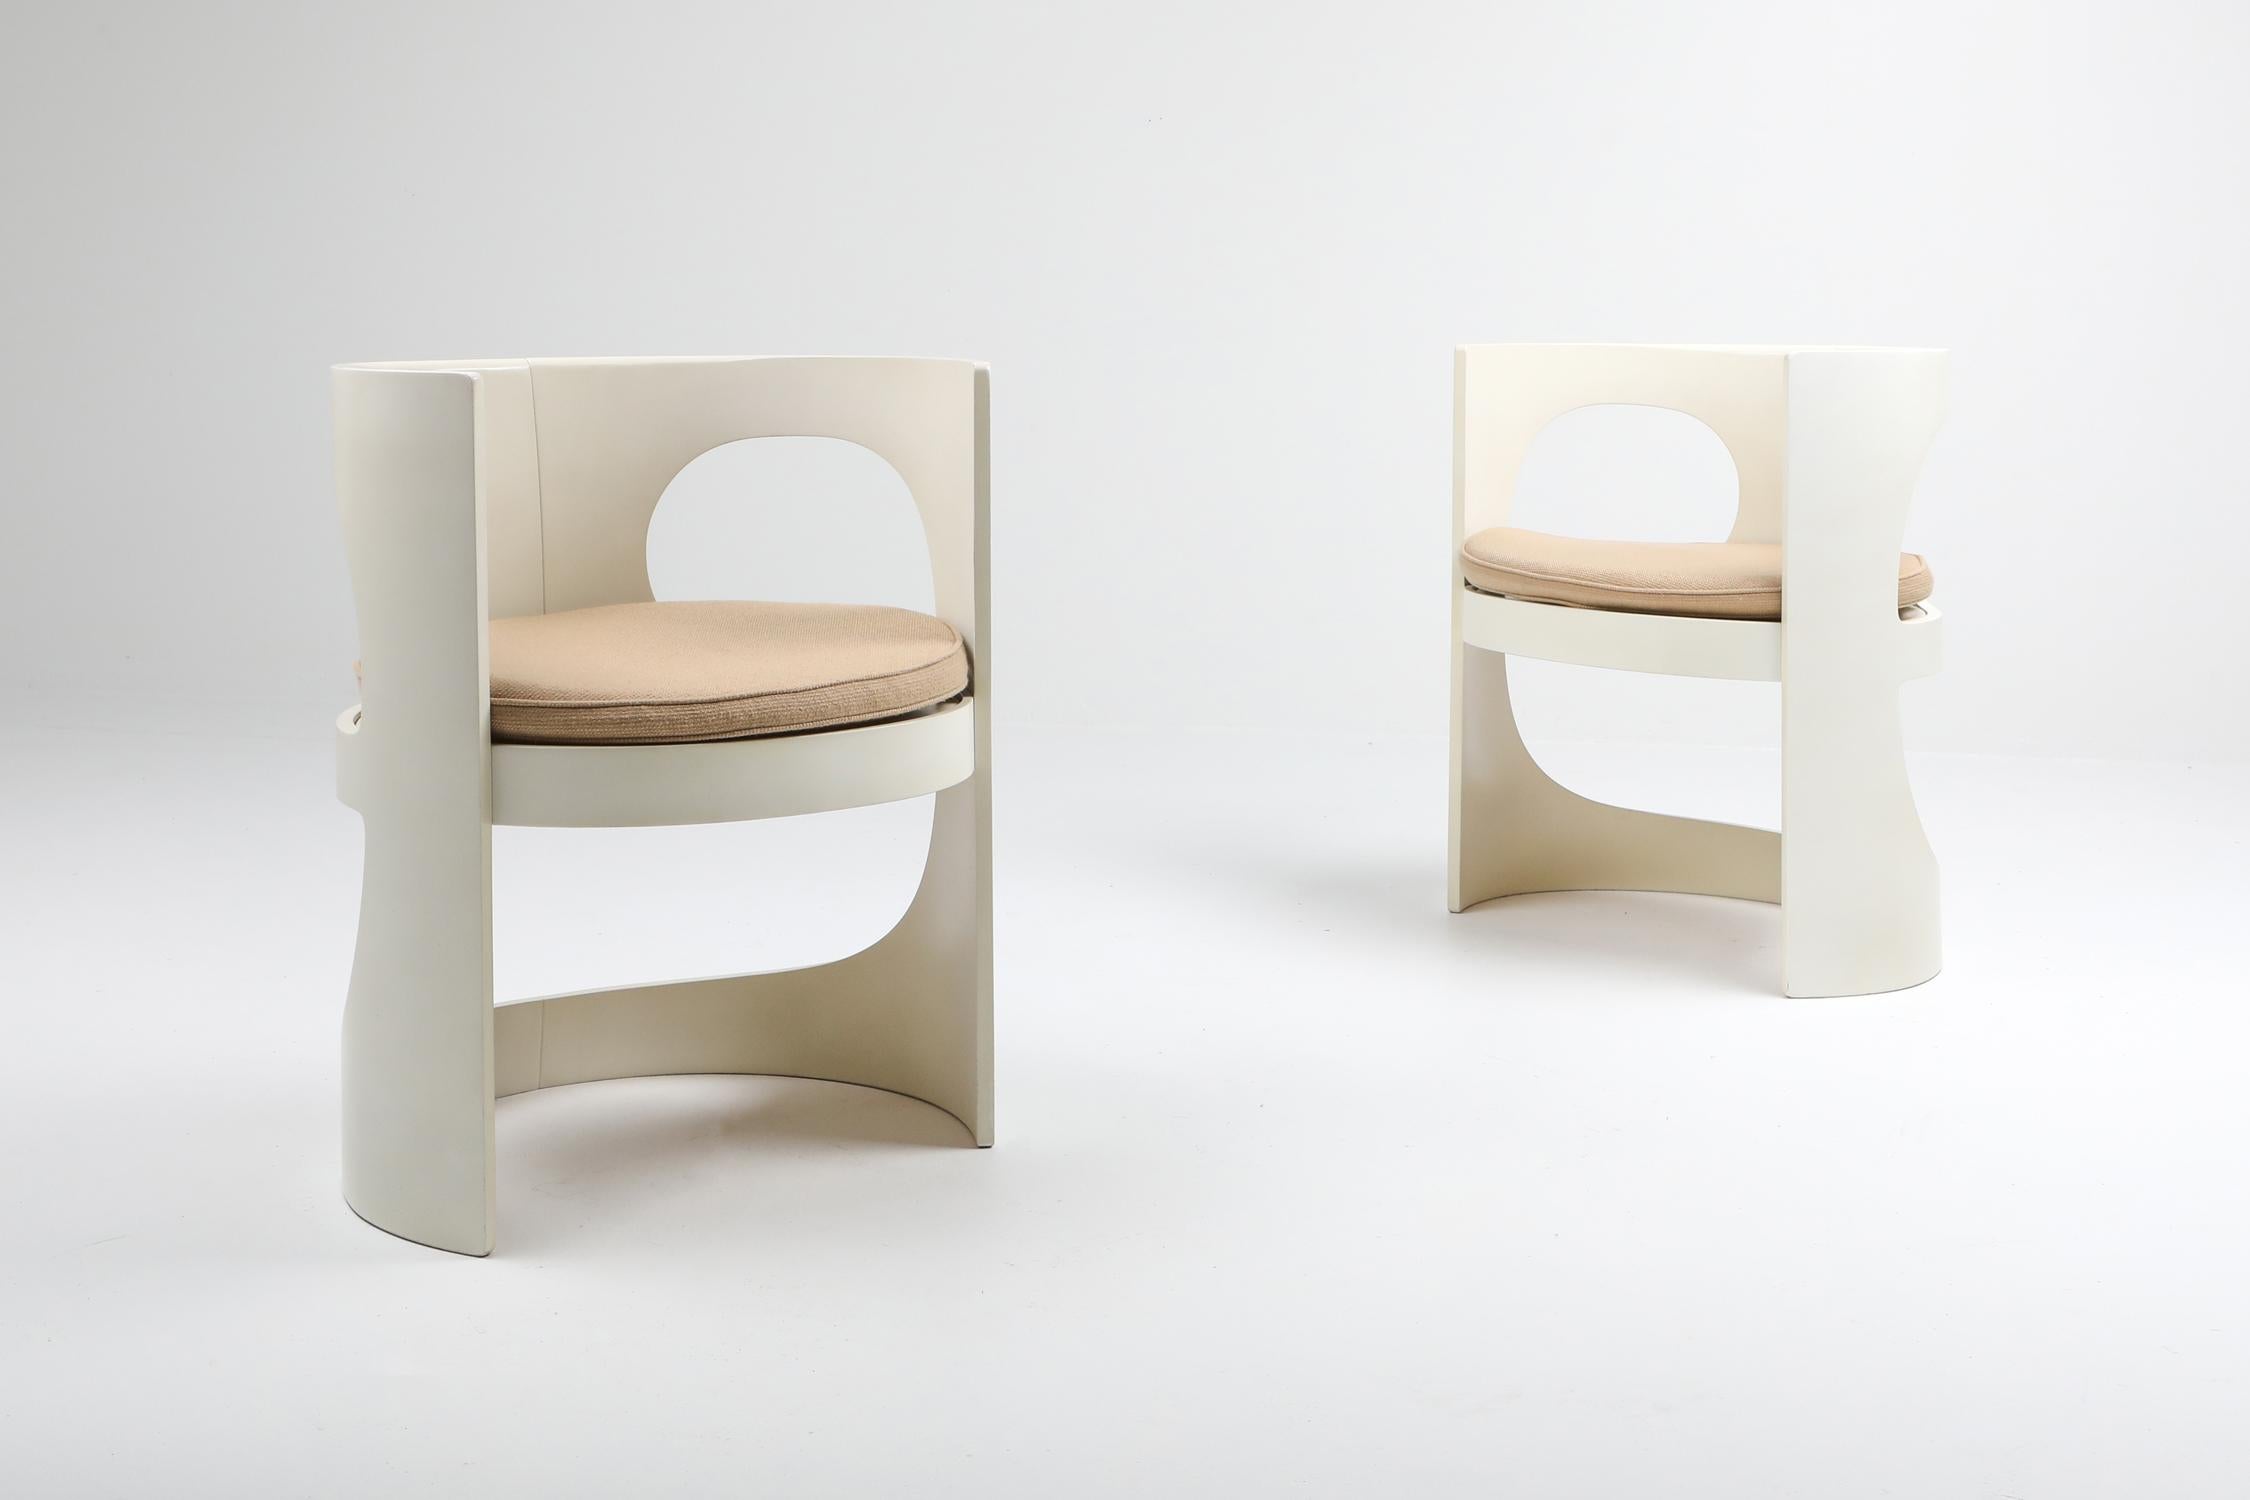 European Asko 'Prepop' Dining Chairs by Arne Jacobsen